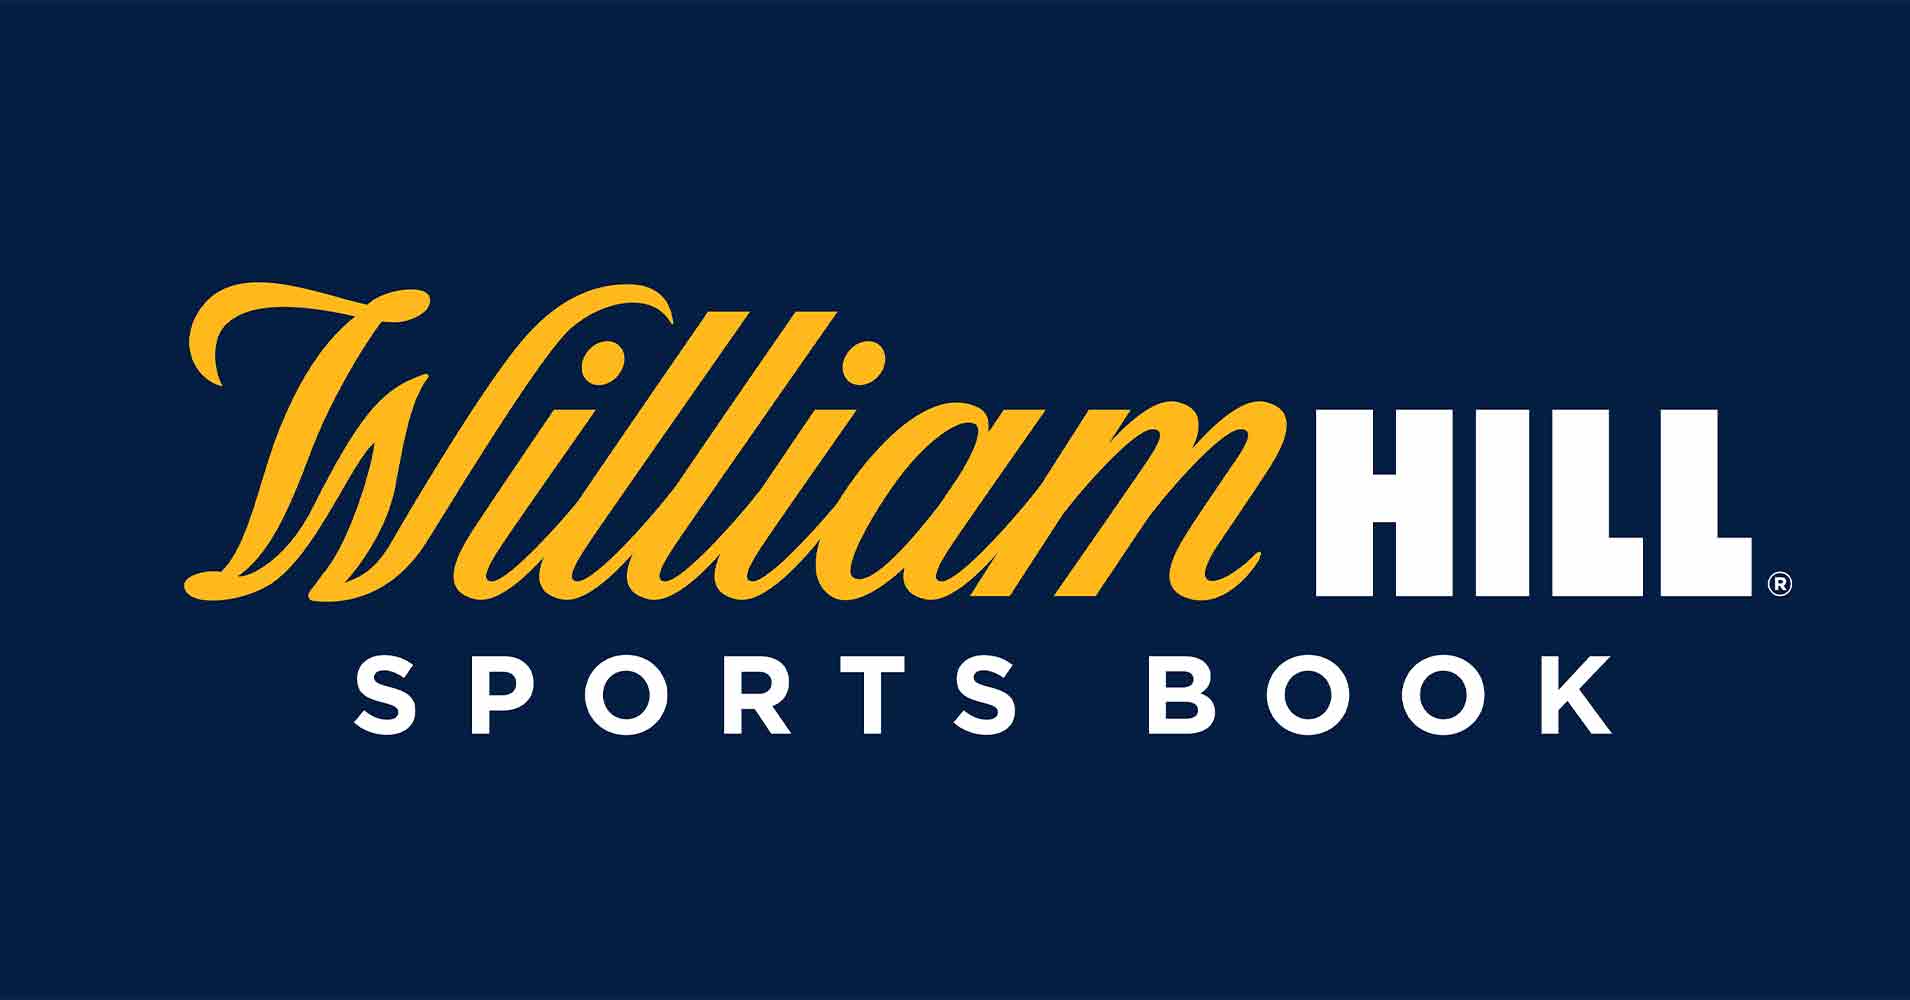 iznos Mjerljiv Automatizacija  WILLIAM HILL TO PURCHASE CG TECHNOLOGY SPORTS BOOK ASSETS - William Hill US  - The Home of Betting